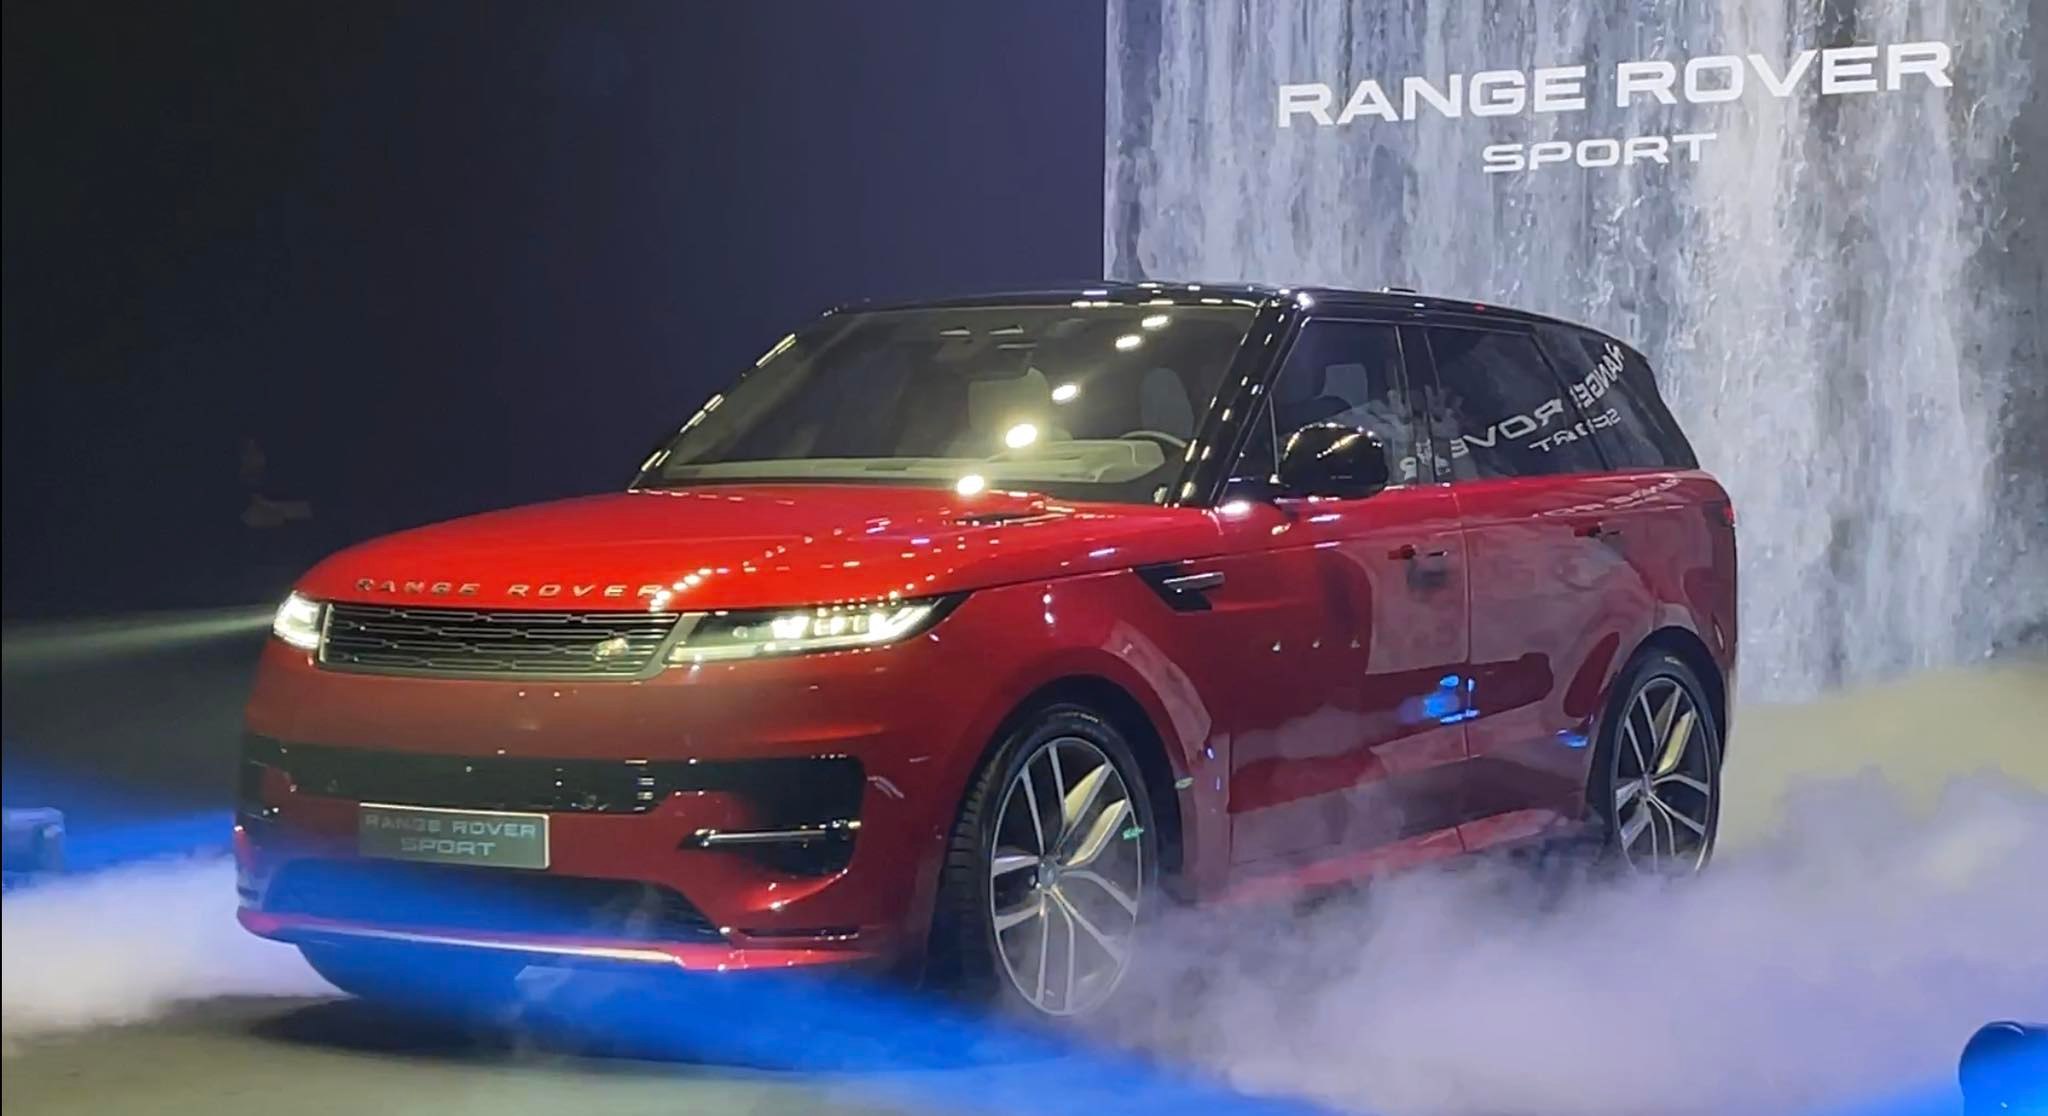 Land Rover Việt Nam Range Rover Sport ok 1 Land Rover Việt Nam chính thức ra mắt Range Rover Sport mới